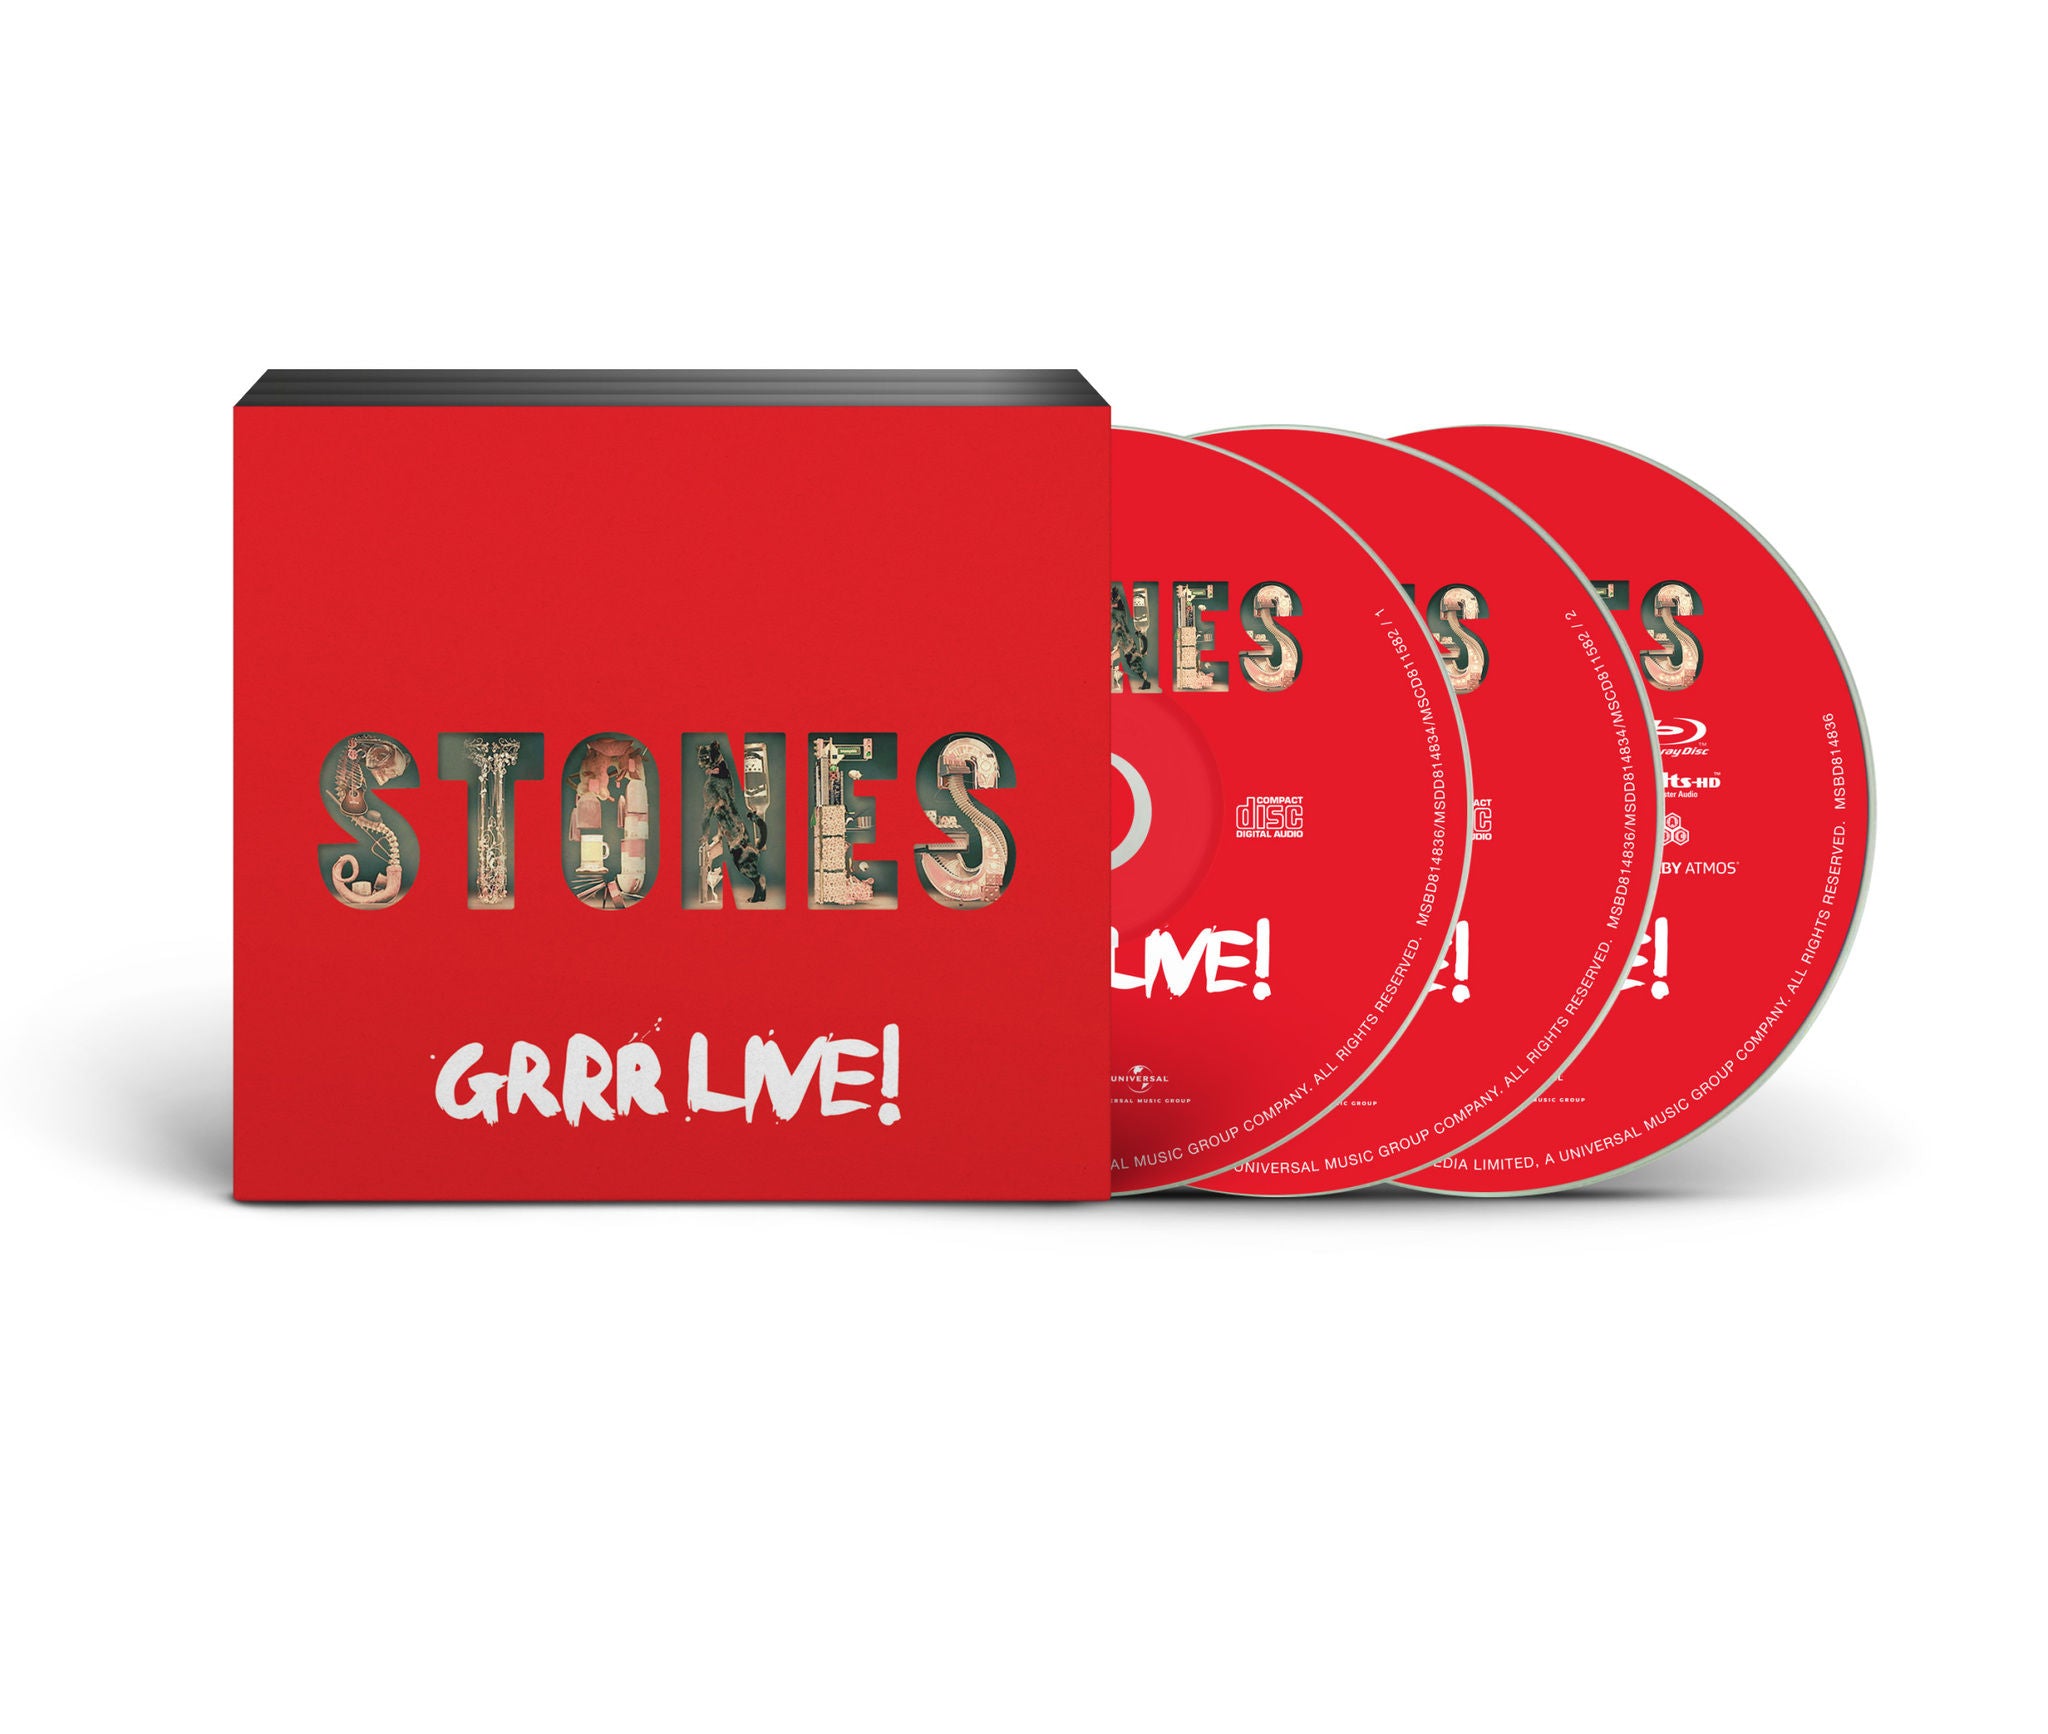 The Rolling Stones - GRRR Live! 2CD & DVD